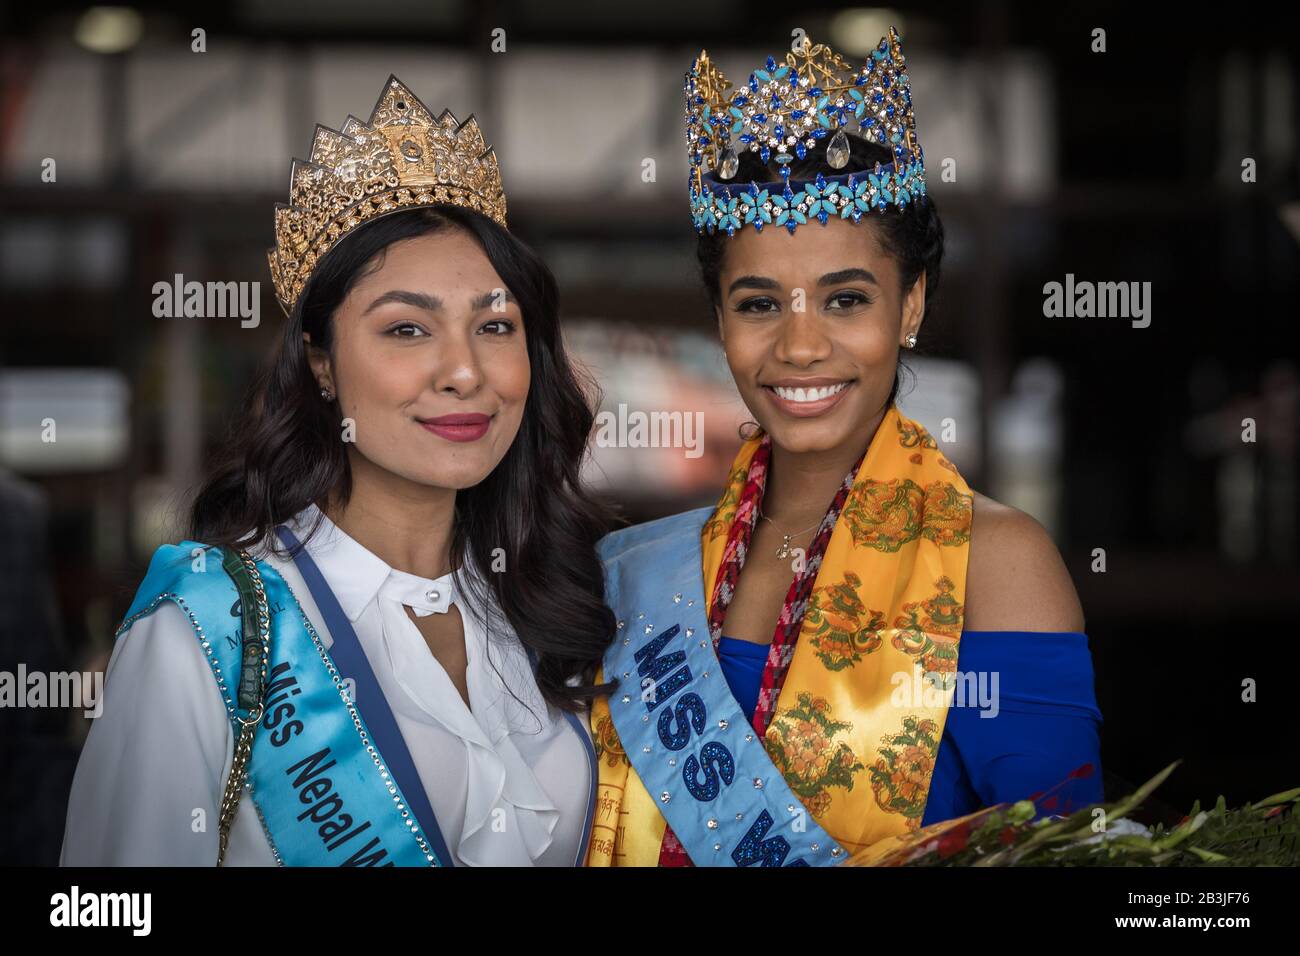 Miss World 2019 Miss Jamaica Toni-Ann Singh (R) and Miss Nepal 2019 Anuskha Shrestha (L) smile at the Tribhuvan International airport in Kathmandu. Stock Photo